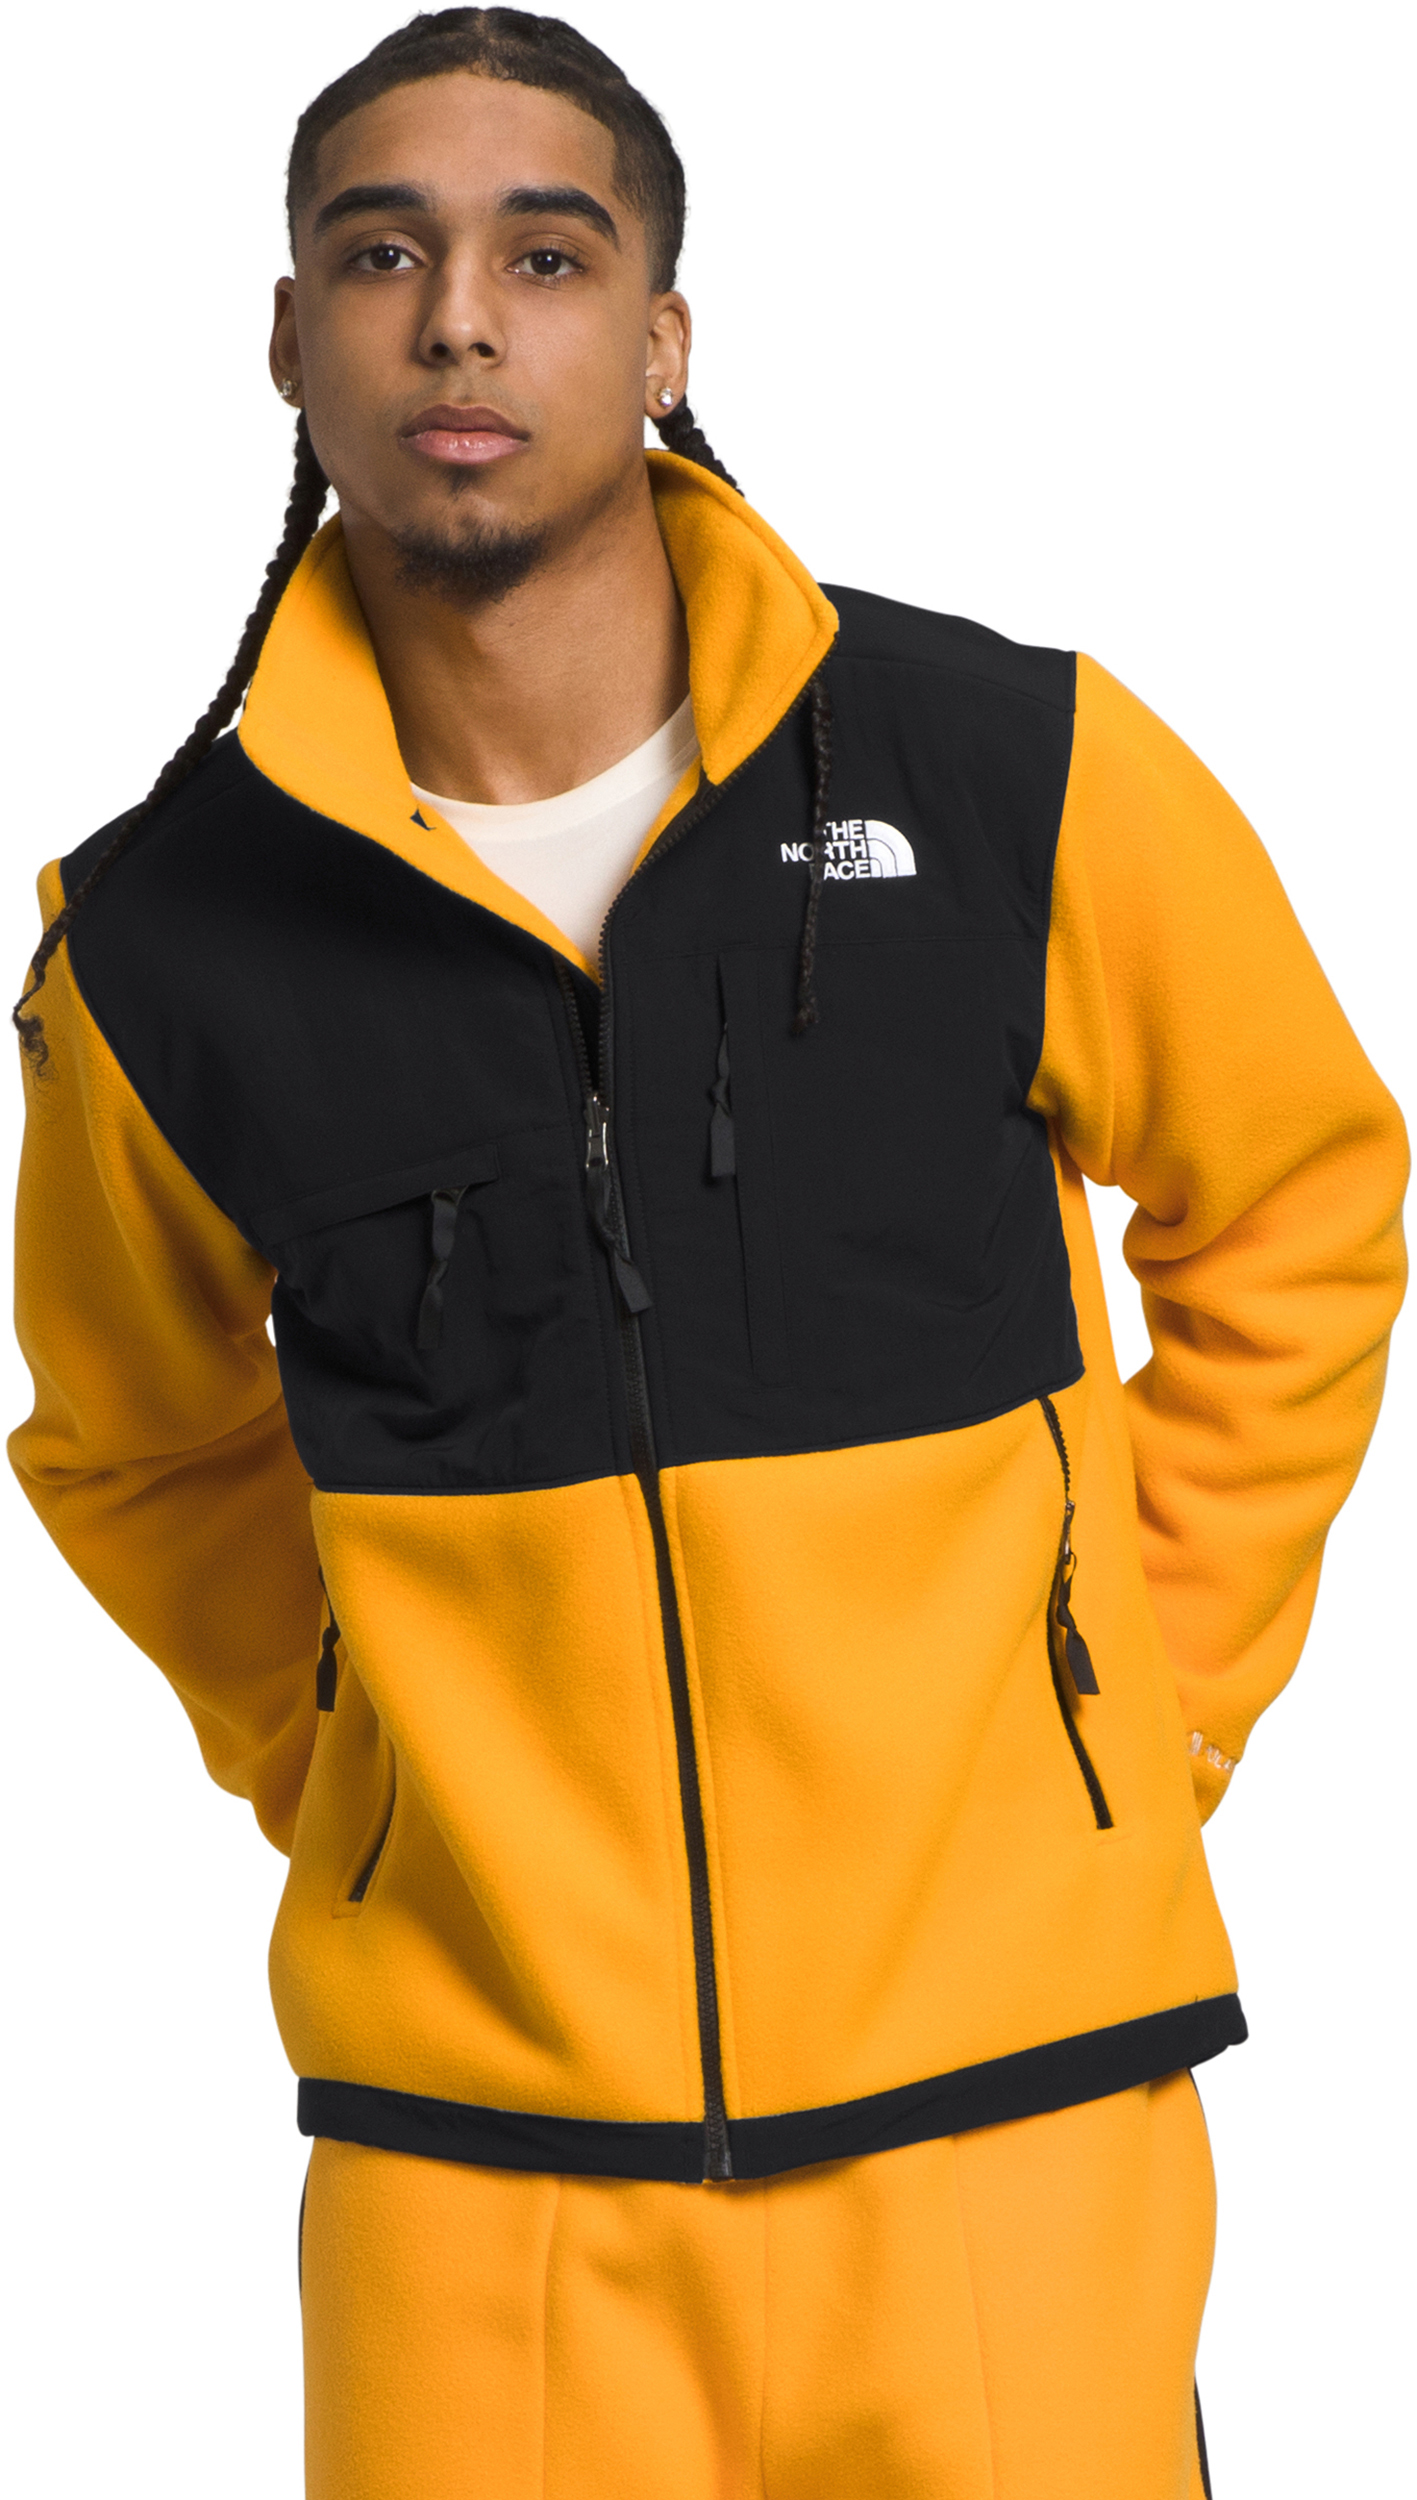 The North Face Denali Fleece Jacket - Men's Extended Size